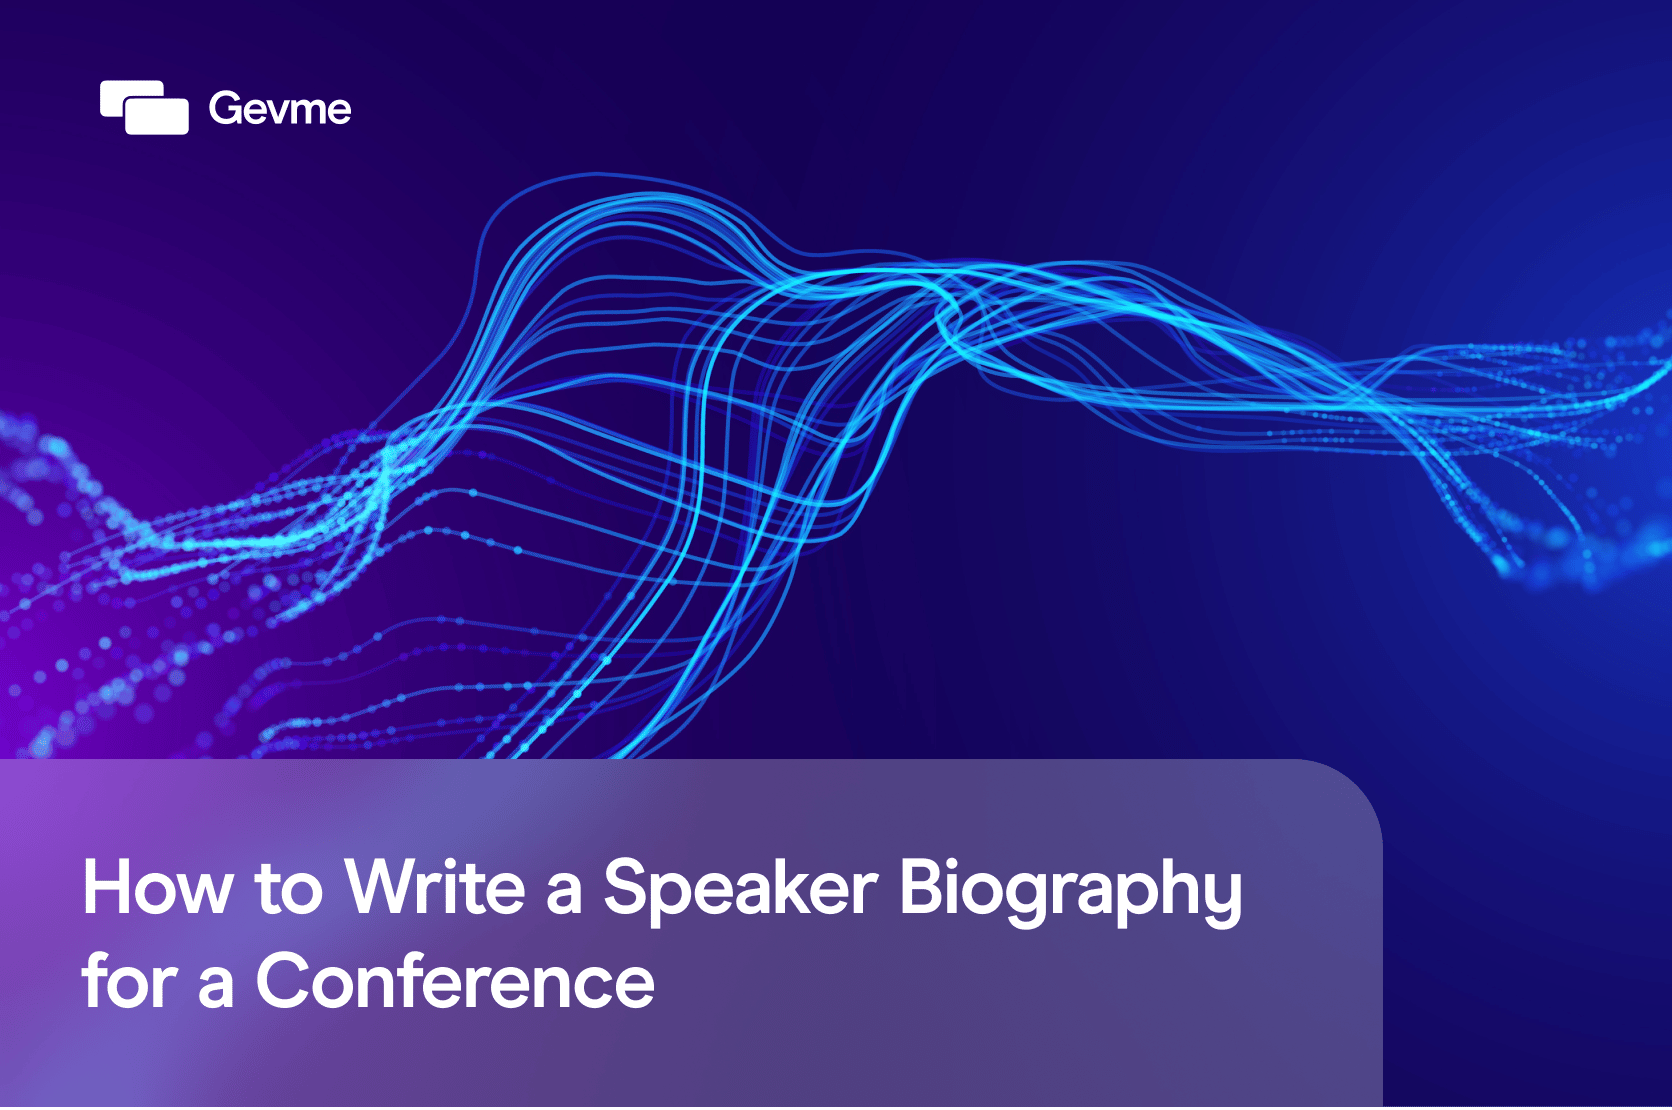 Speaker biography for conference